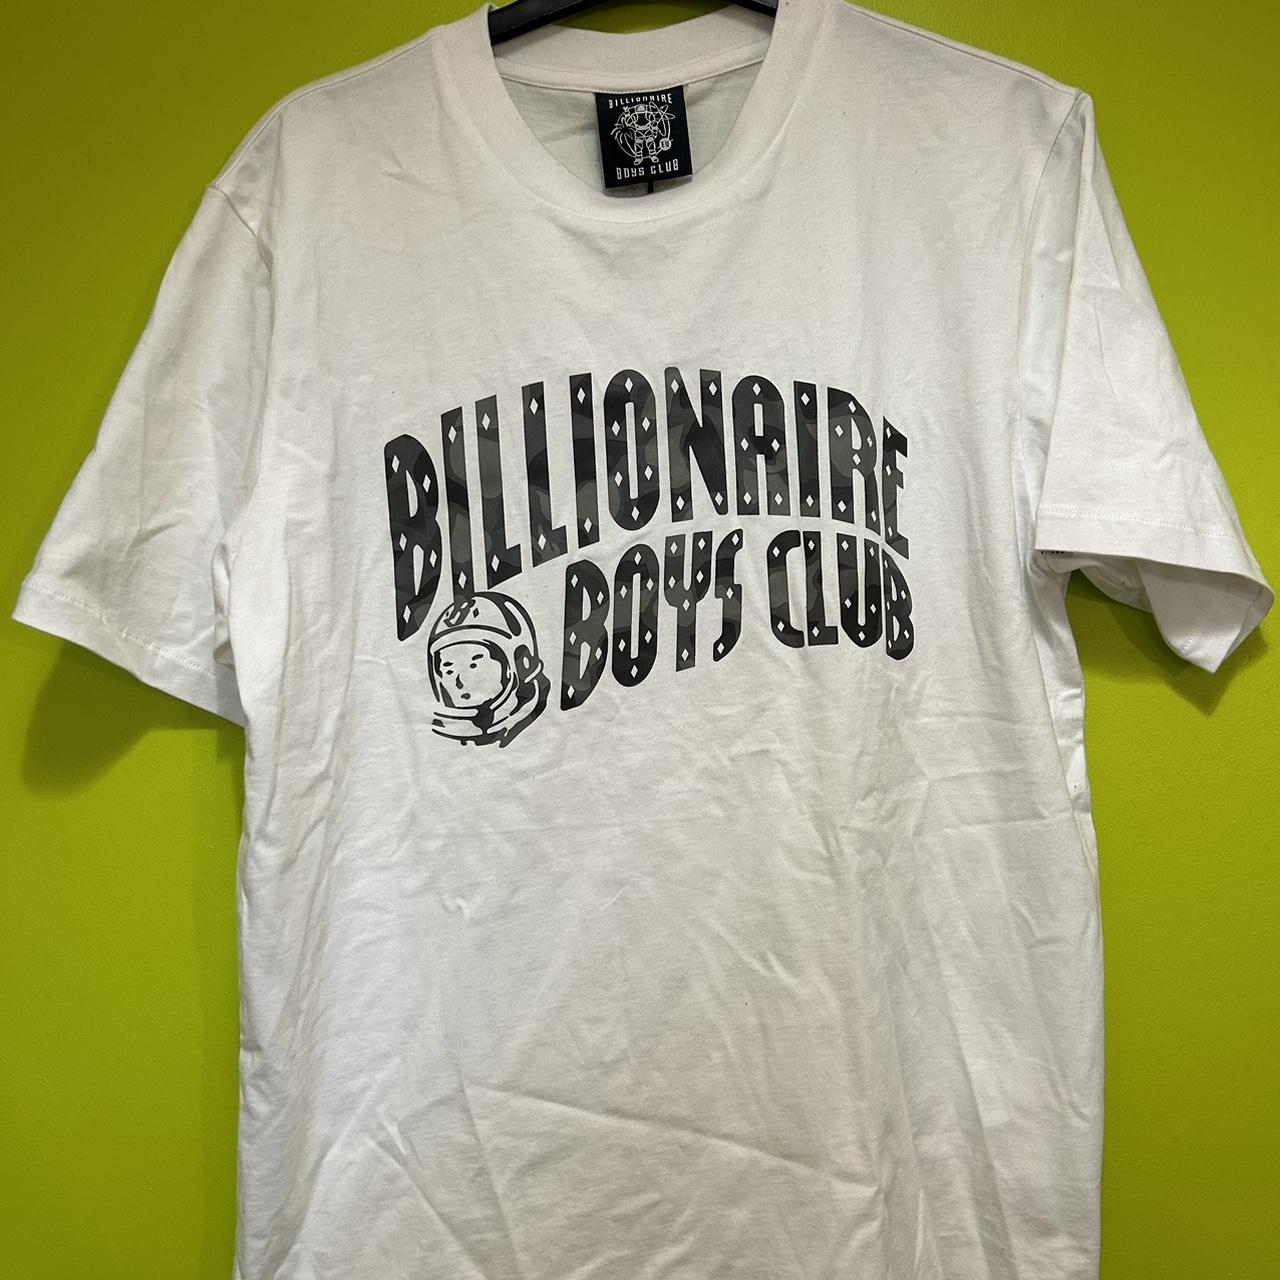 Billionaire Boys Club Men's White and Grey T-shirt | Depop